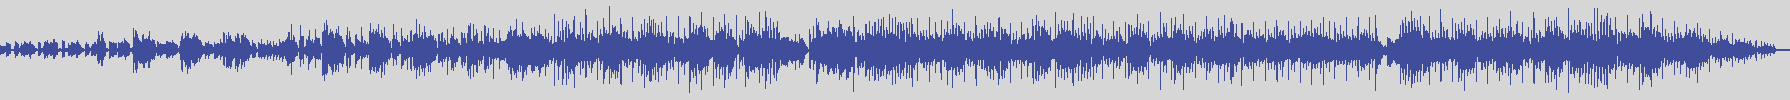 digiphonic_records [DPR013] Little Tony - T'amo e T'amerò [Original Mix] audio wave form